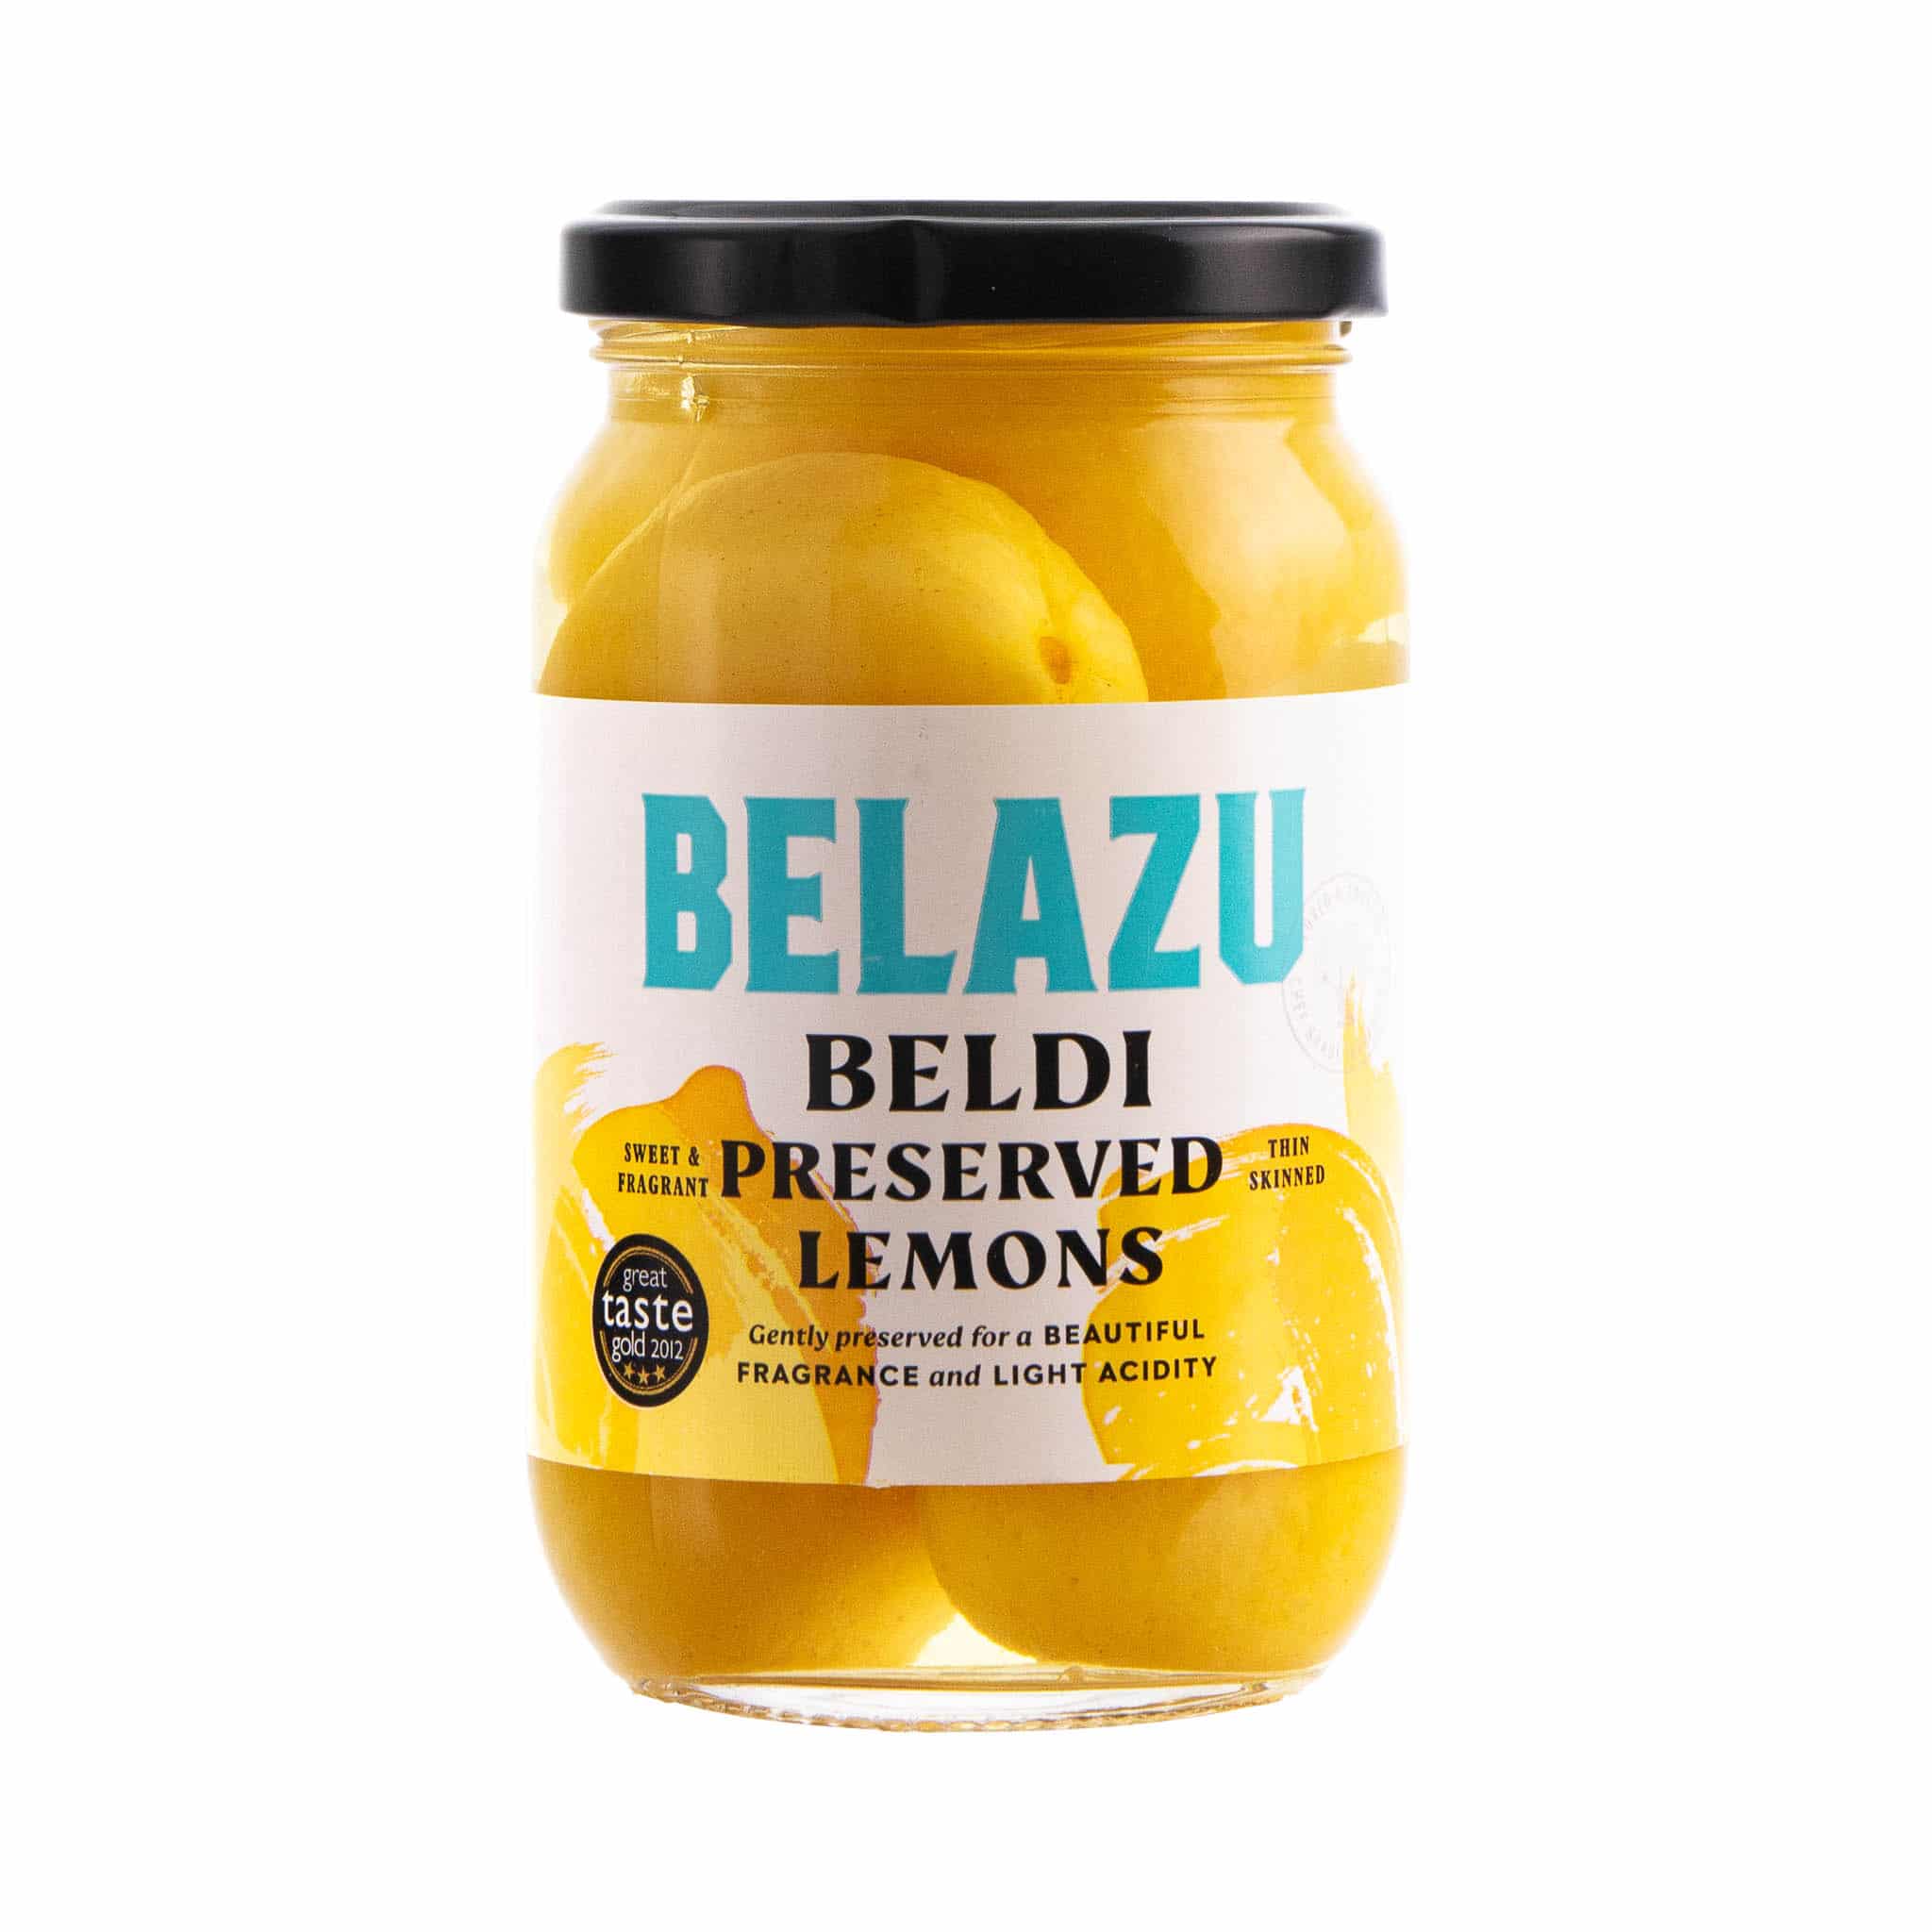 Belazu Beldi Preserved Lemons, 350g